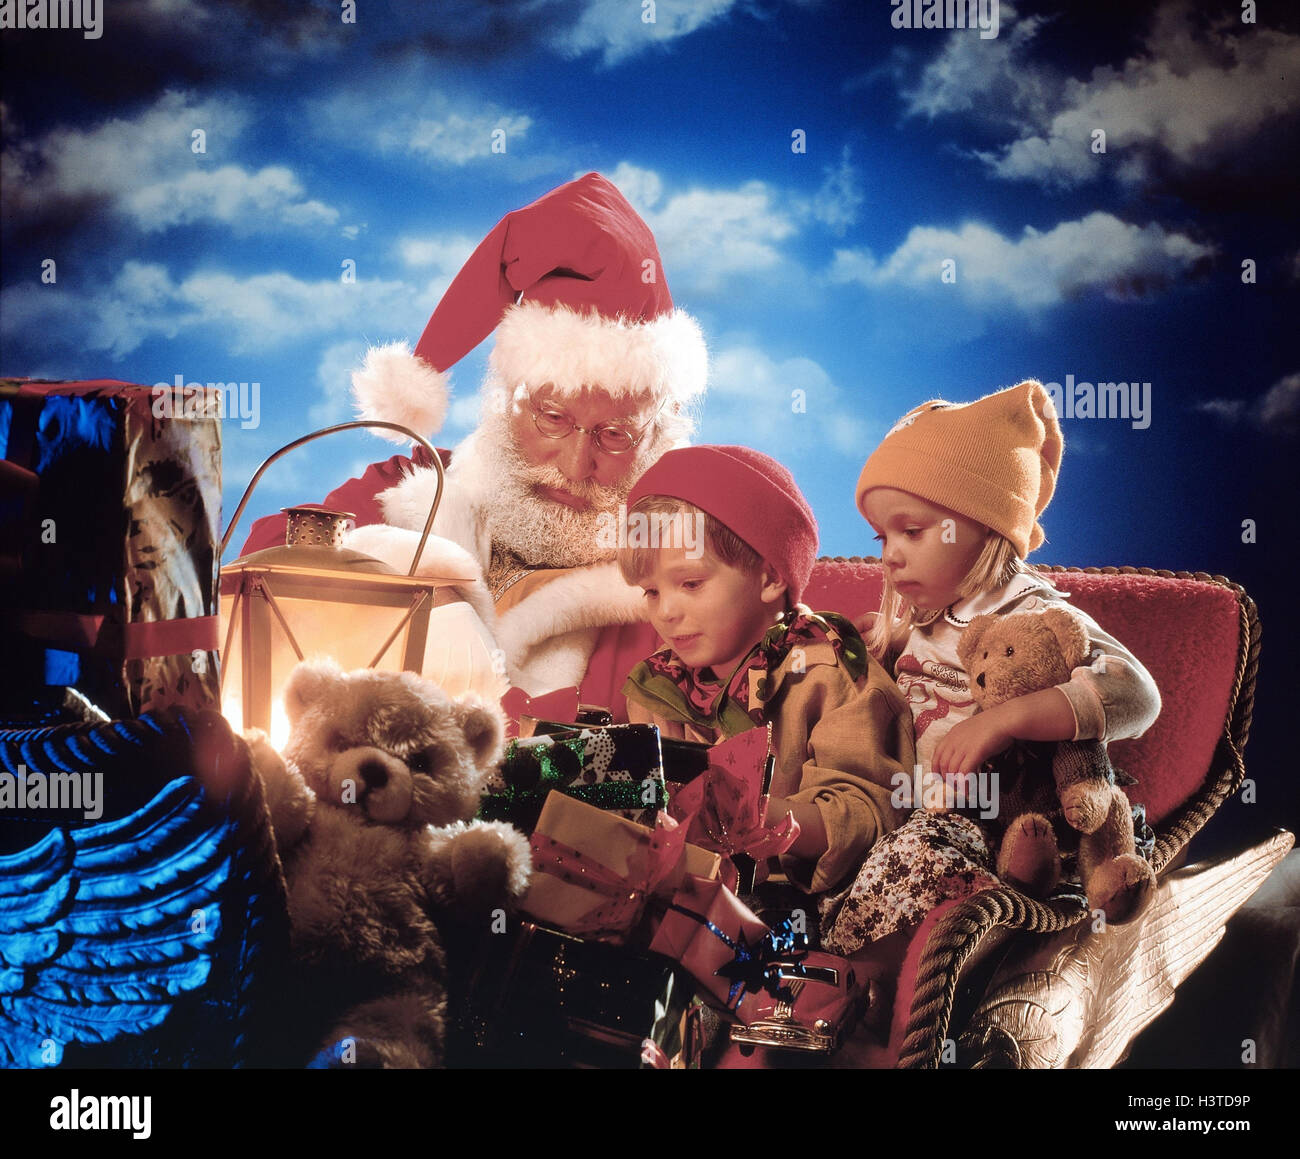 Slides, Santa Claus, children, presents Composing, Christmas, Santa Claus, boy, girl, Christmas presents, packages, teddy bears, lantern Stock Photo